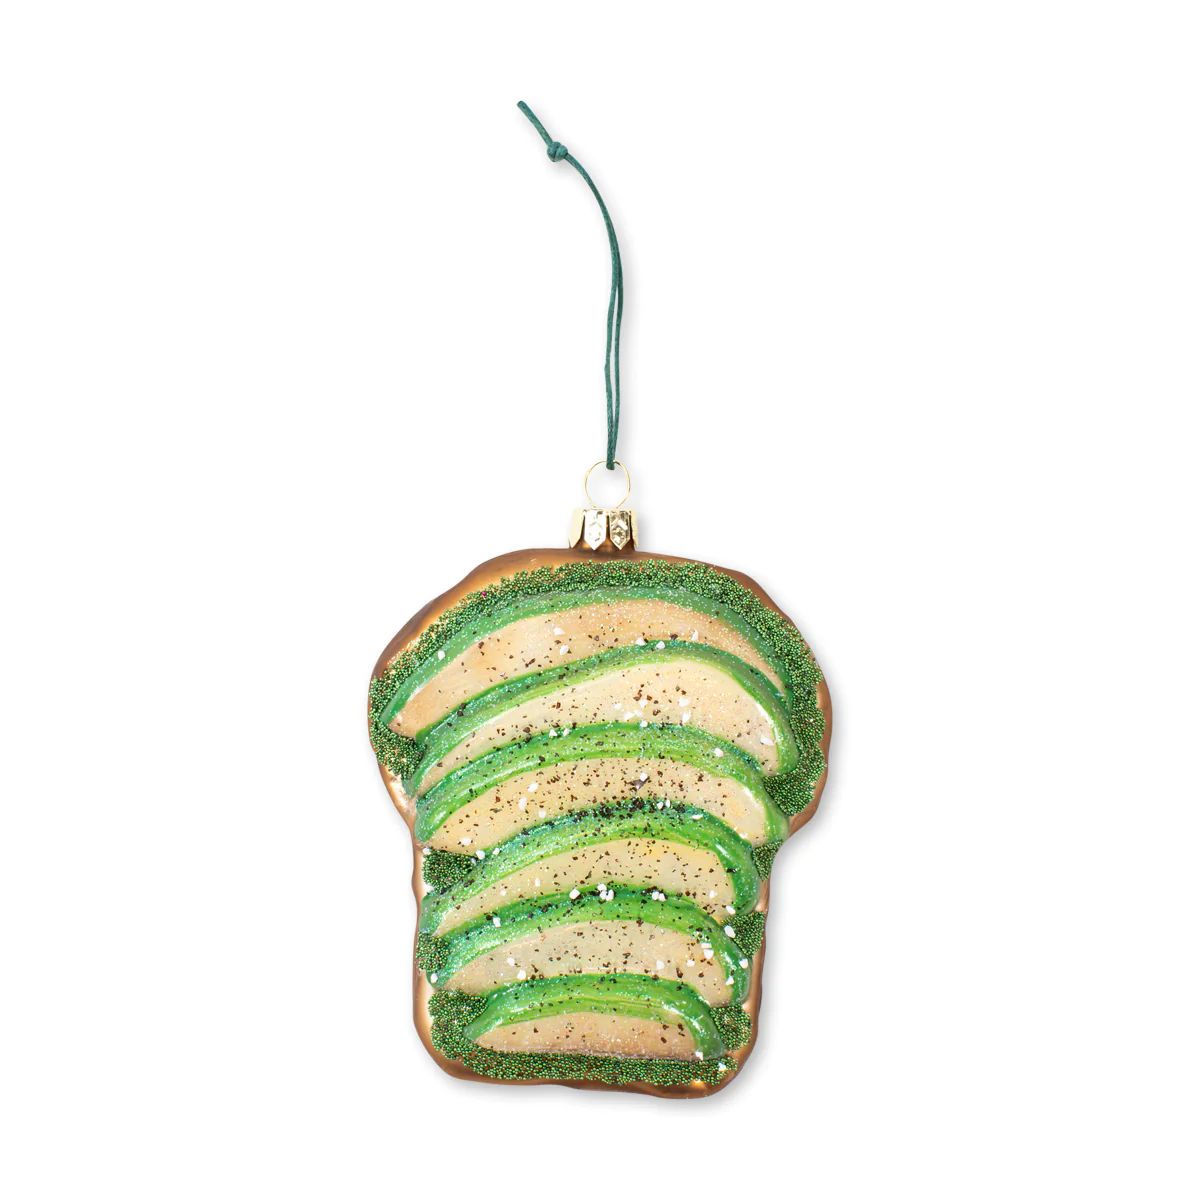 Avocado Toast Ornament | Furbish Studio